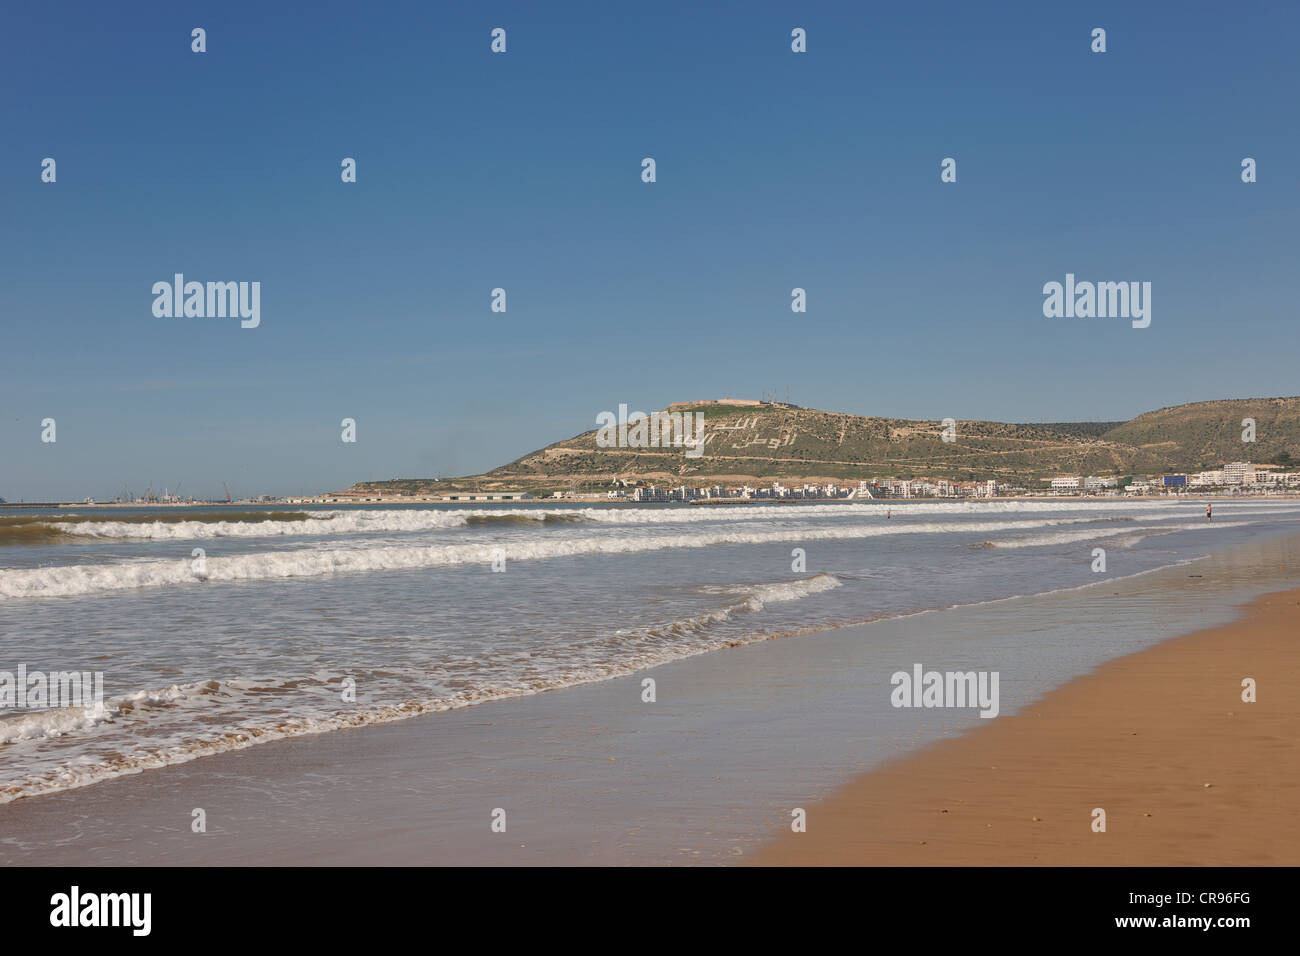 Agadir Beach, hill with the words, Allah, al-Watan, al-Malik, meaning Allah, the Homeland, the King, Morocco, Africa Stock Photo